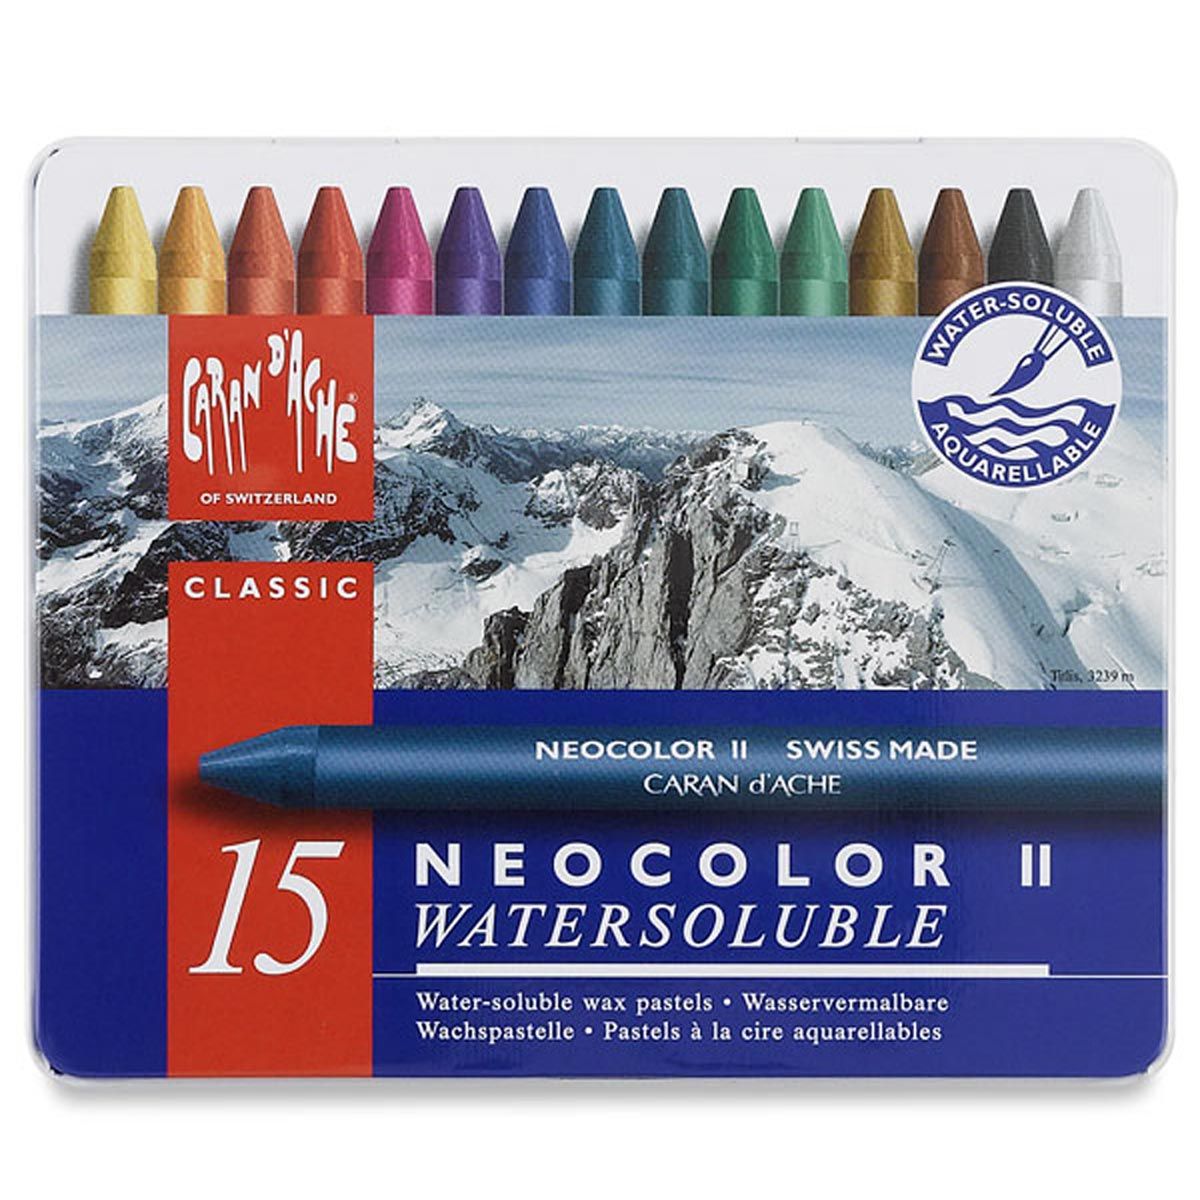 Caran d'Ache Neocolor II Water-Soluble Pastel Set of 15